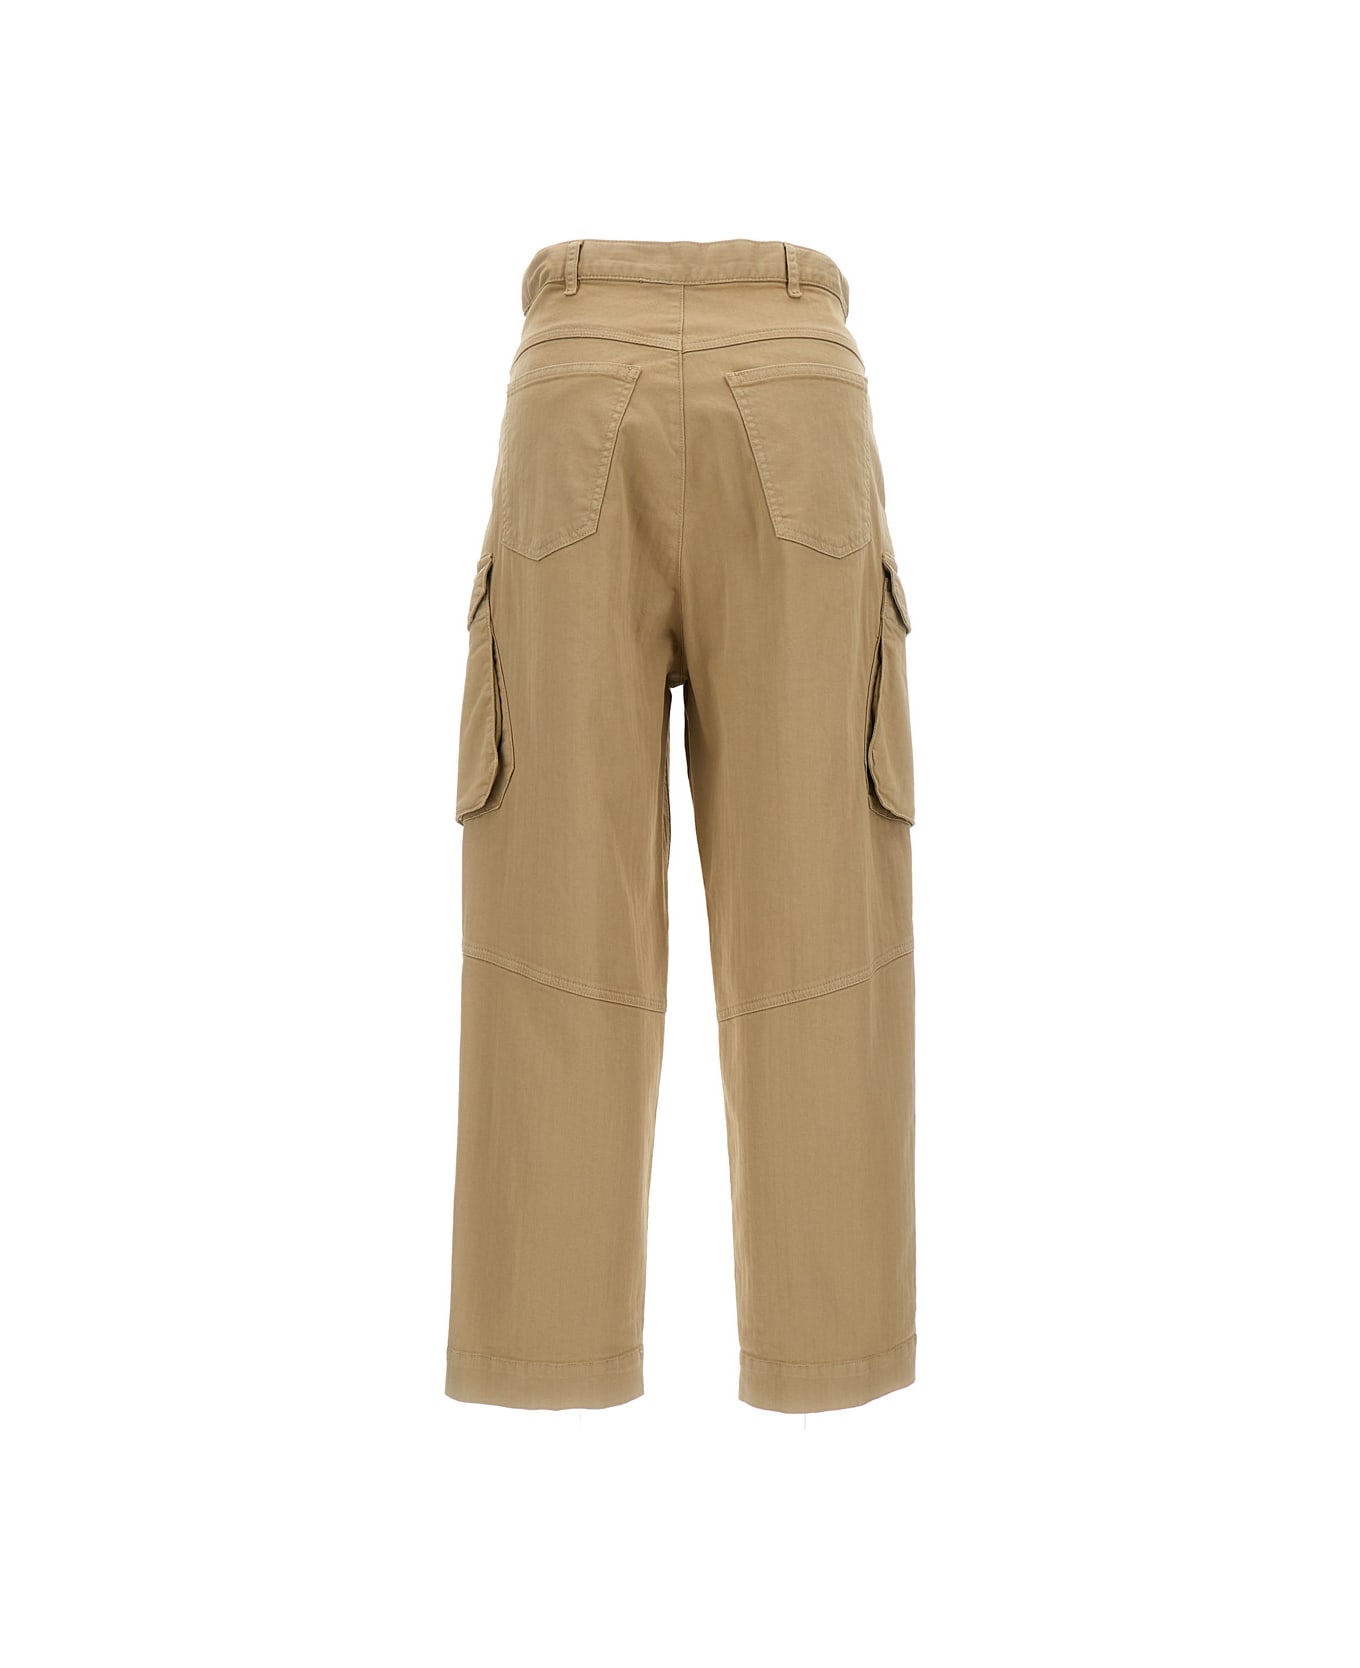 SEMICOUTURE Bianca Cotton Cargo Pants - Beige